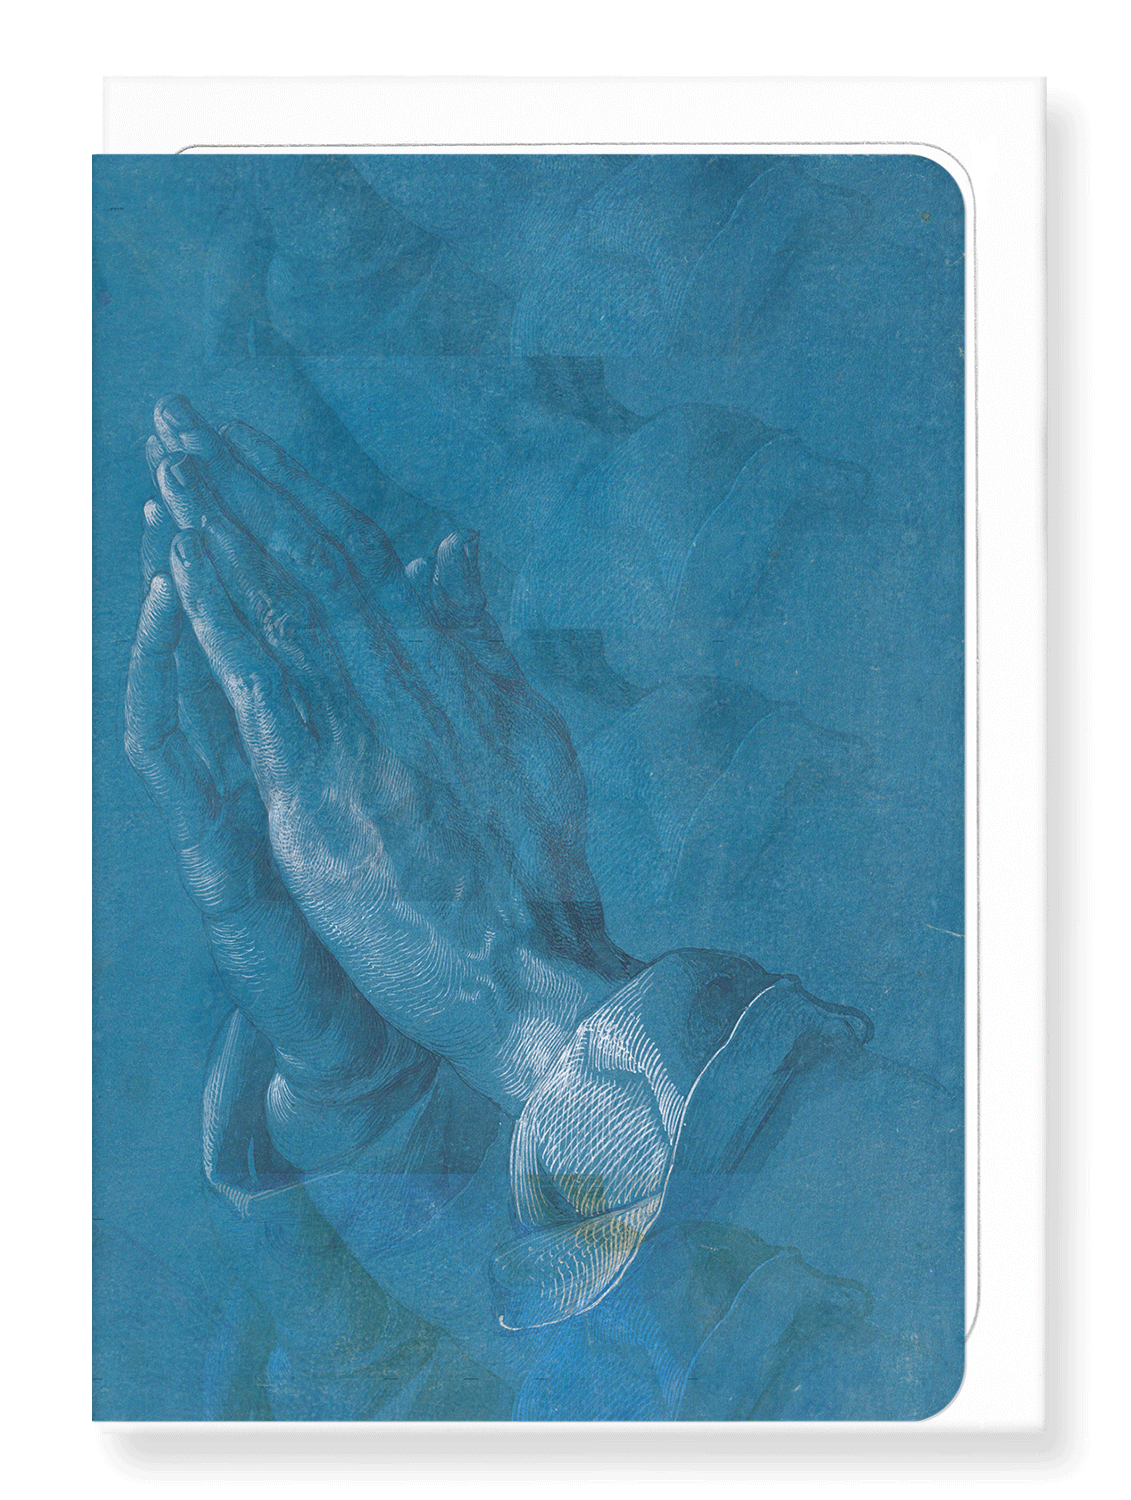 Ezen Designs - Praying hands - Greeting Card - Front